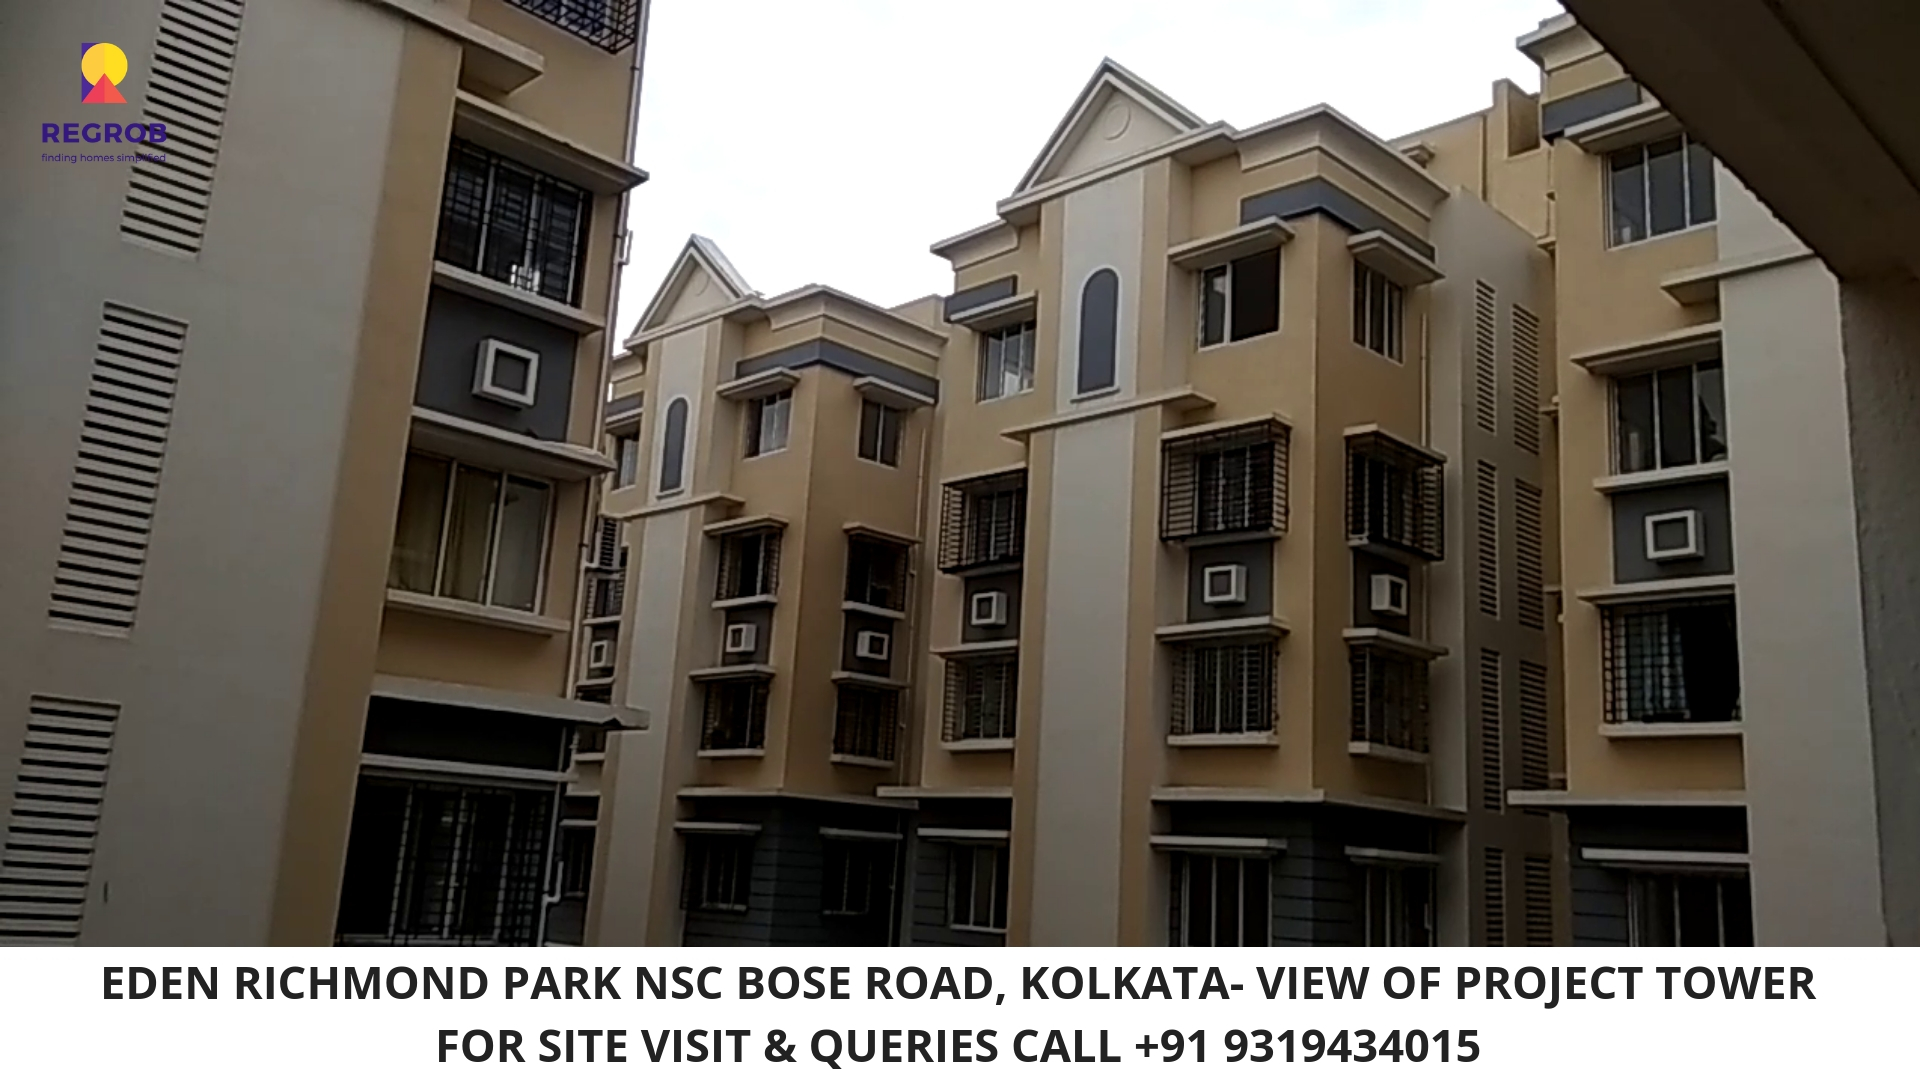 Eden Richmond Park NSC Bose Road Kolkata